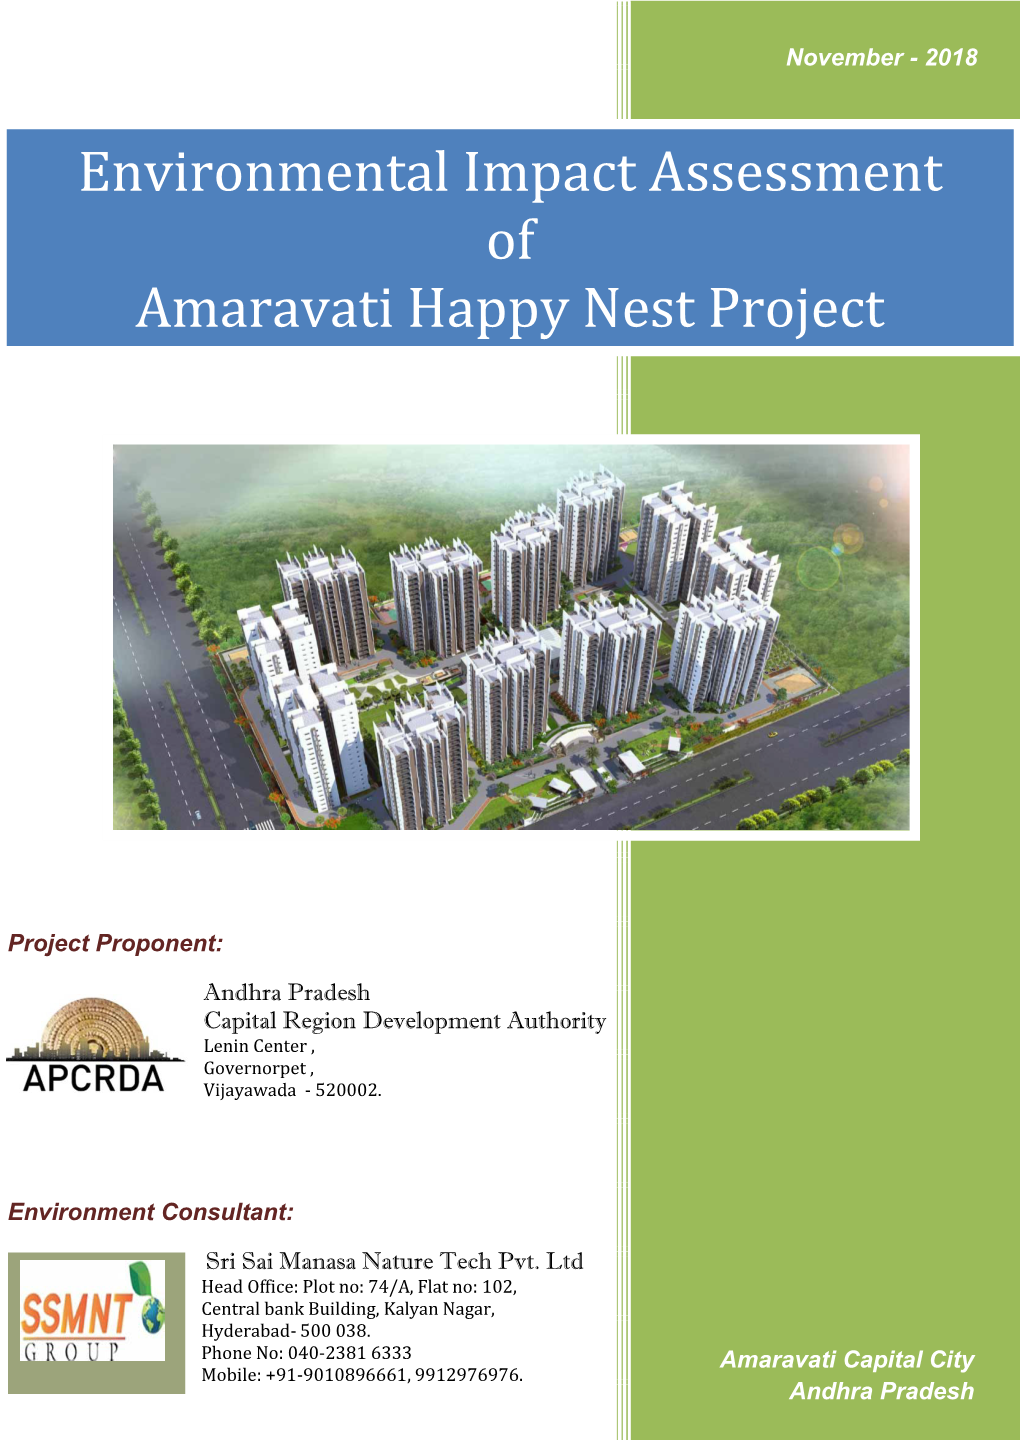 Environmental Impact Assessment of Amaravati Happy Nest Project